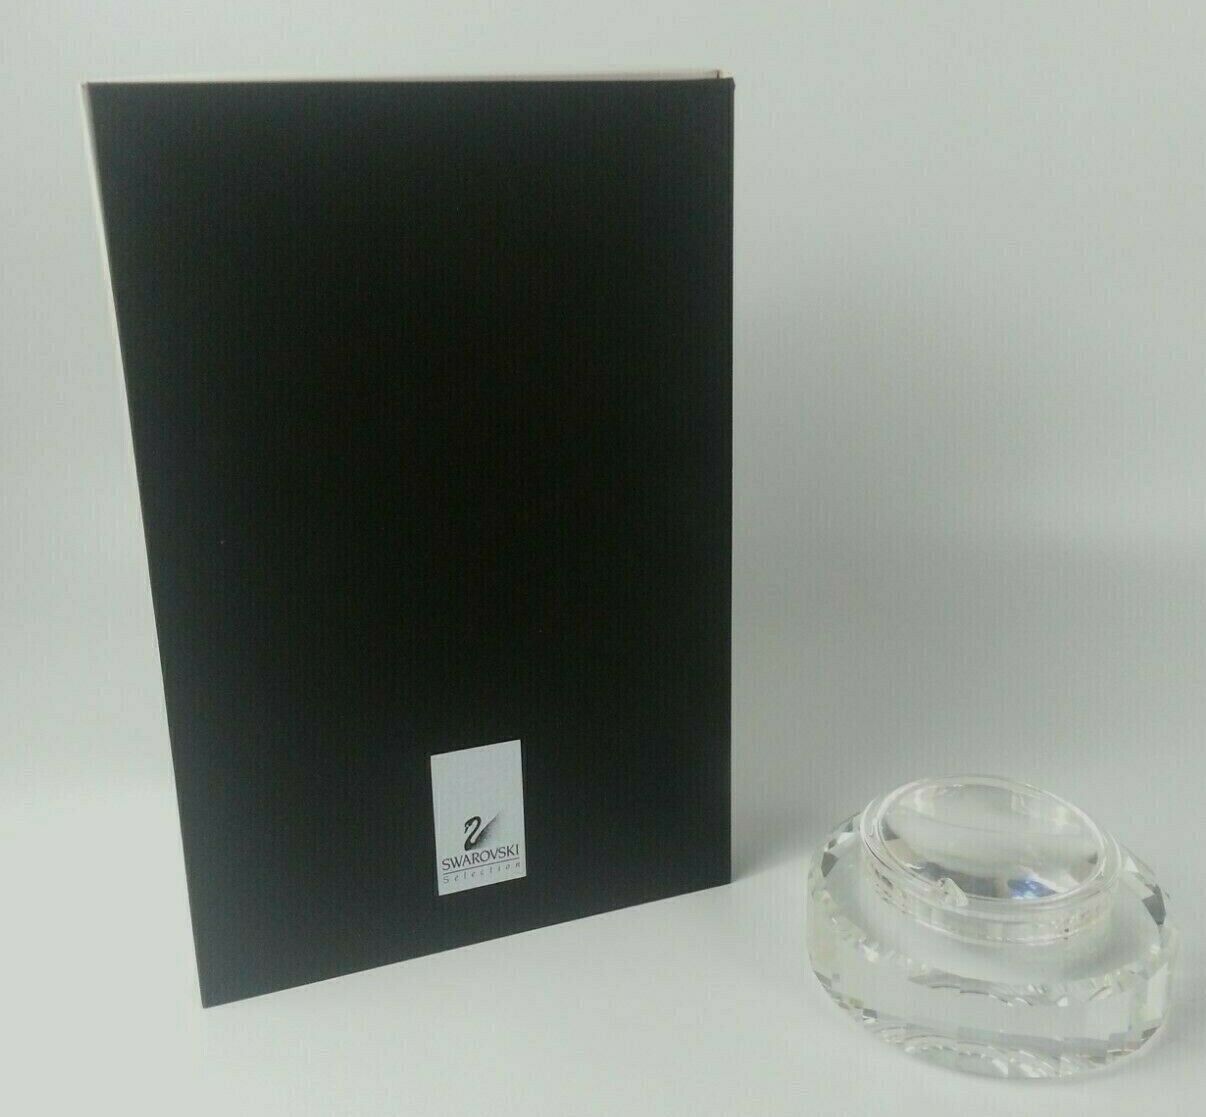 Swarovski Selection Crystal Jewelry Box 168005 Original Packaging 9280NR000